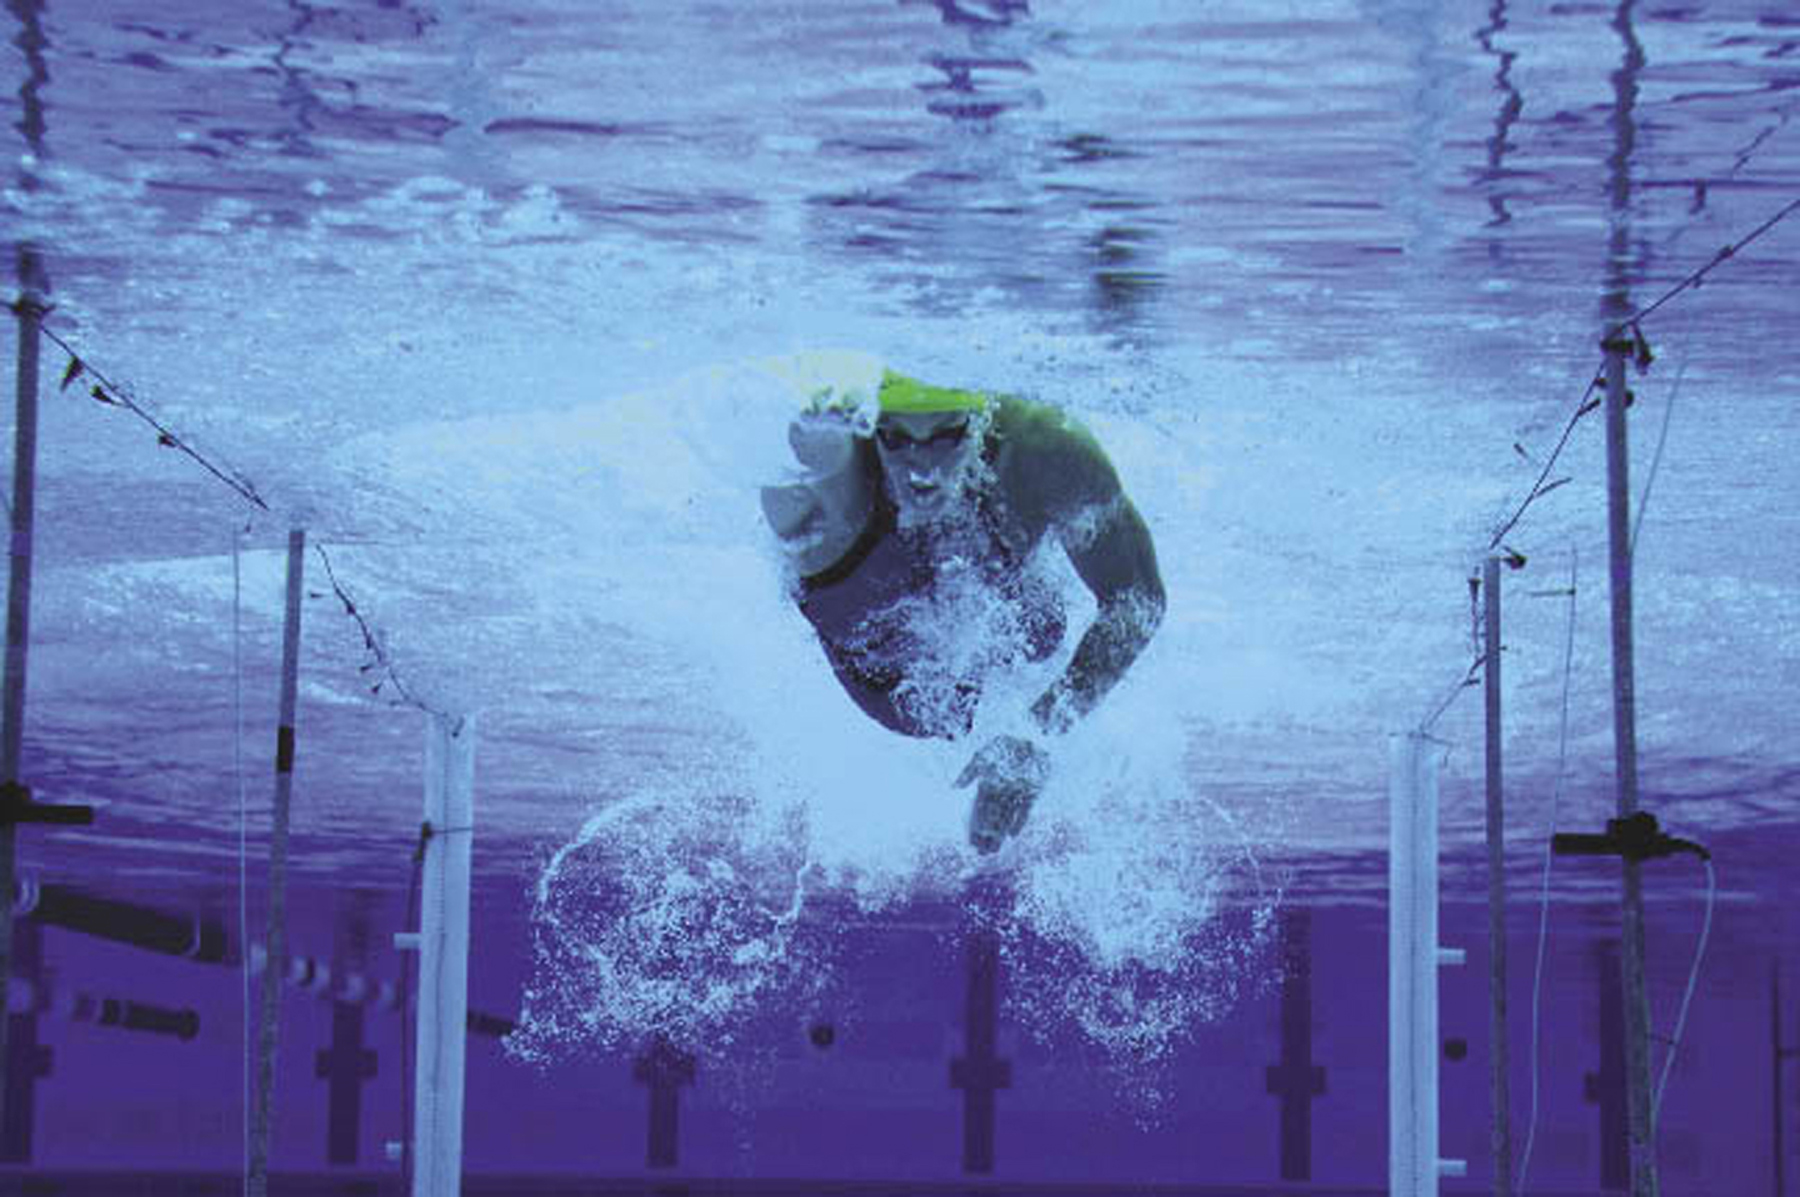 An athlete swims toward the camera.